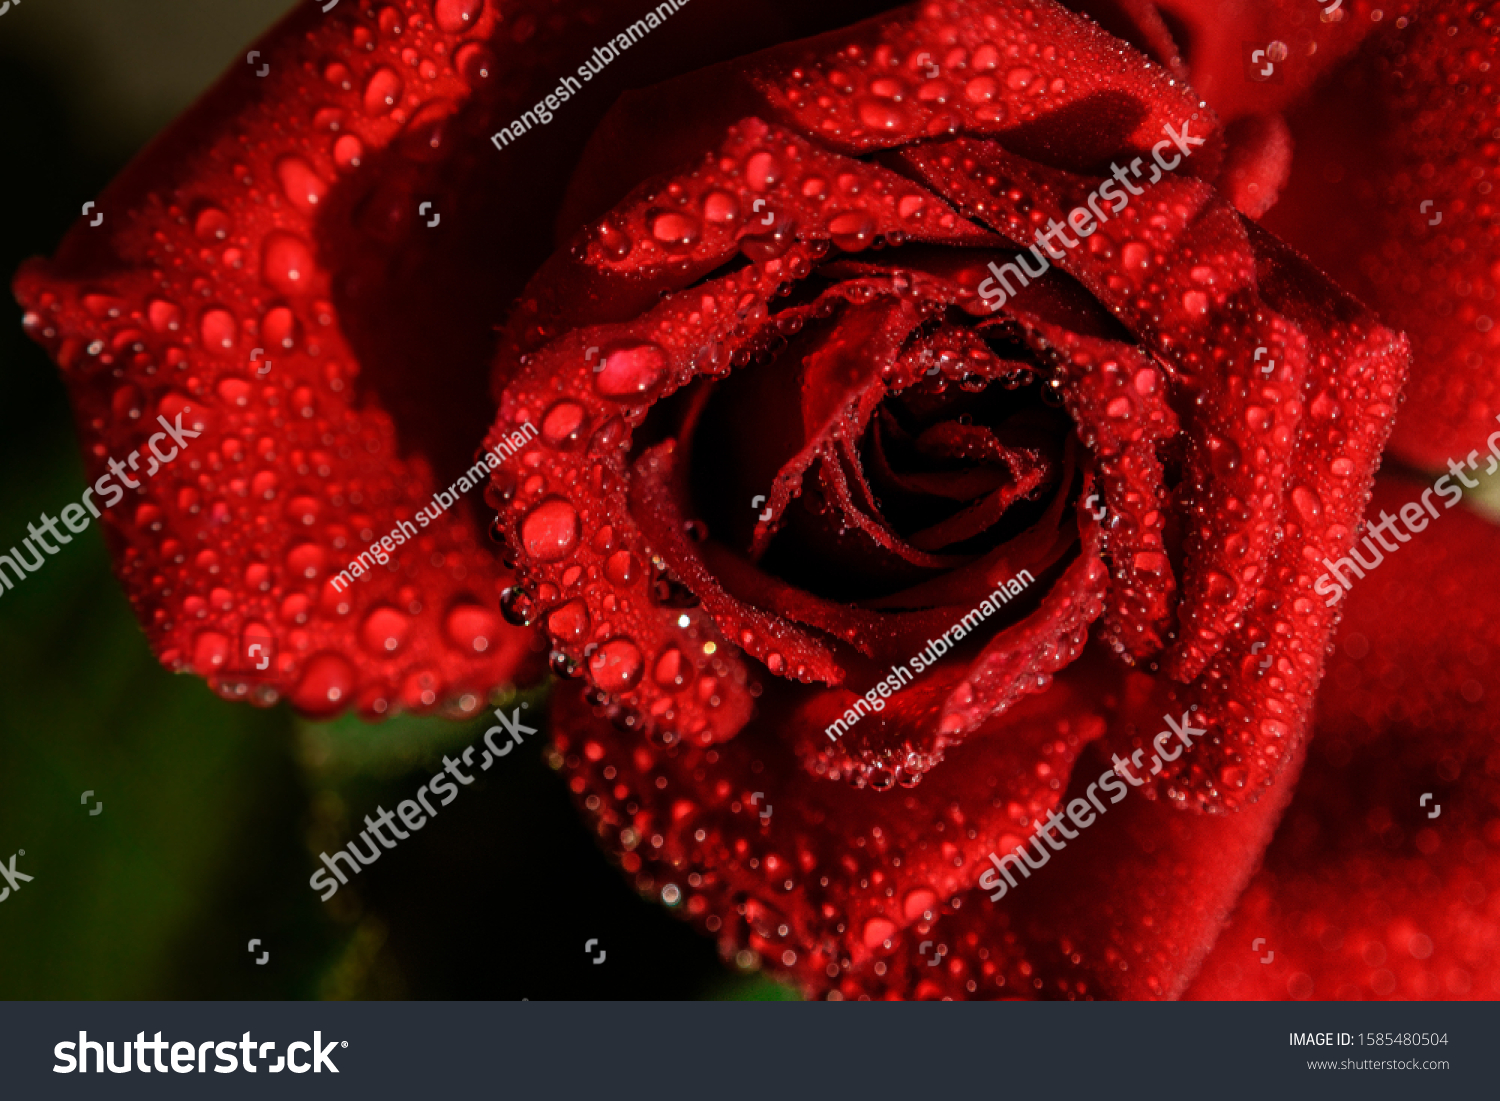 97 Floralwallpapers Images, Stock Photos & Vectors | Shutterstock